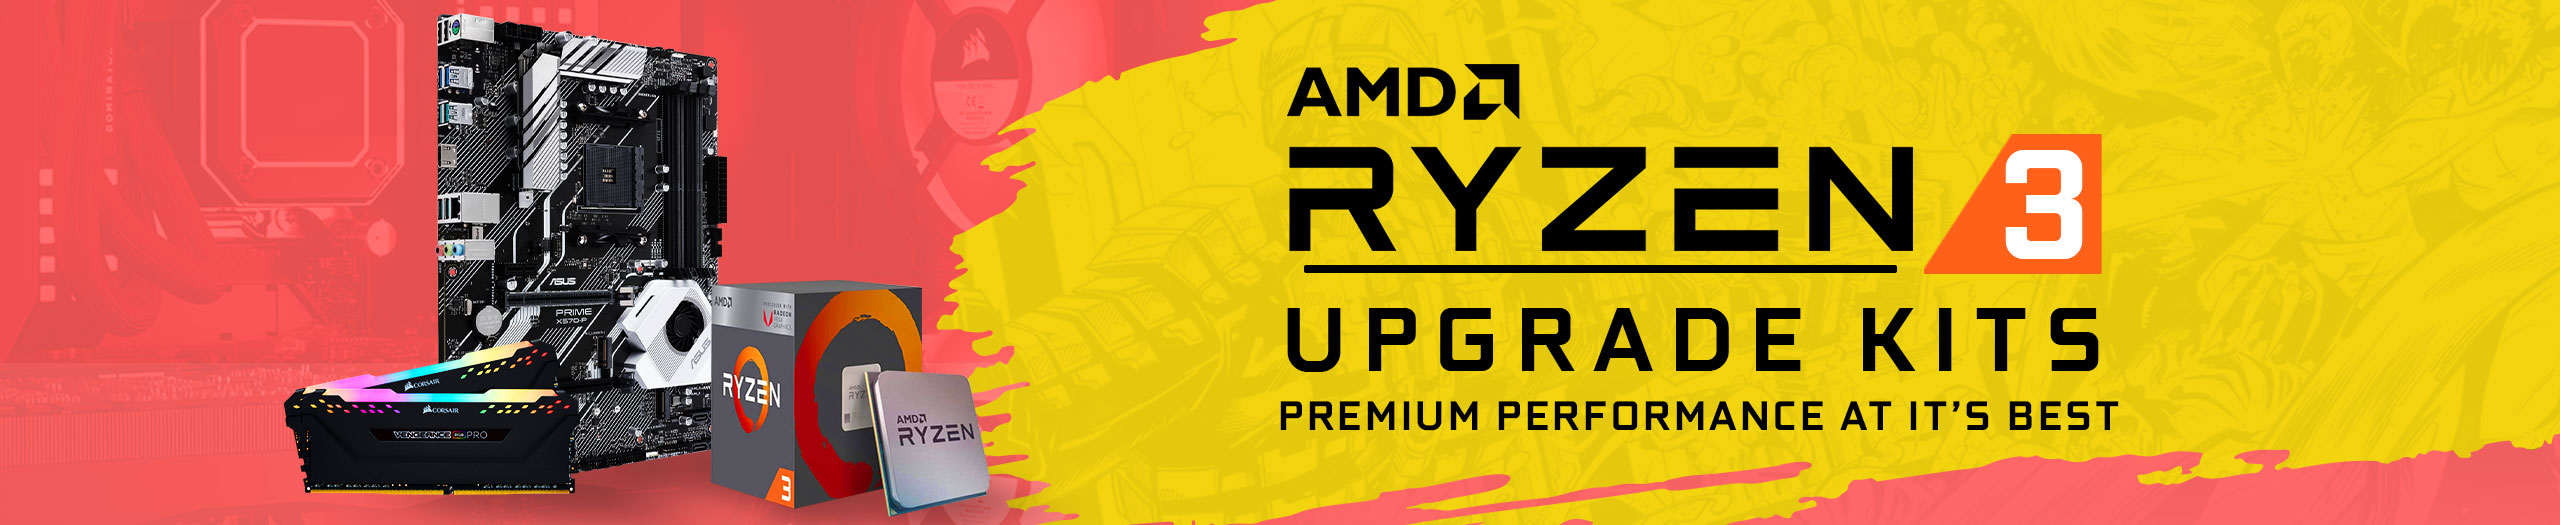 AMD Ryzen 3 Upgrade Kits